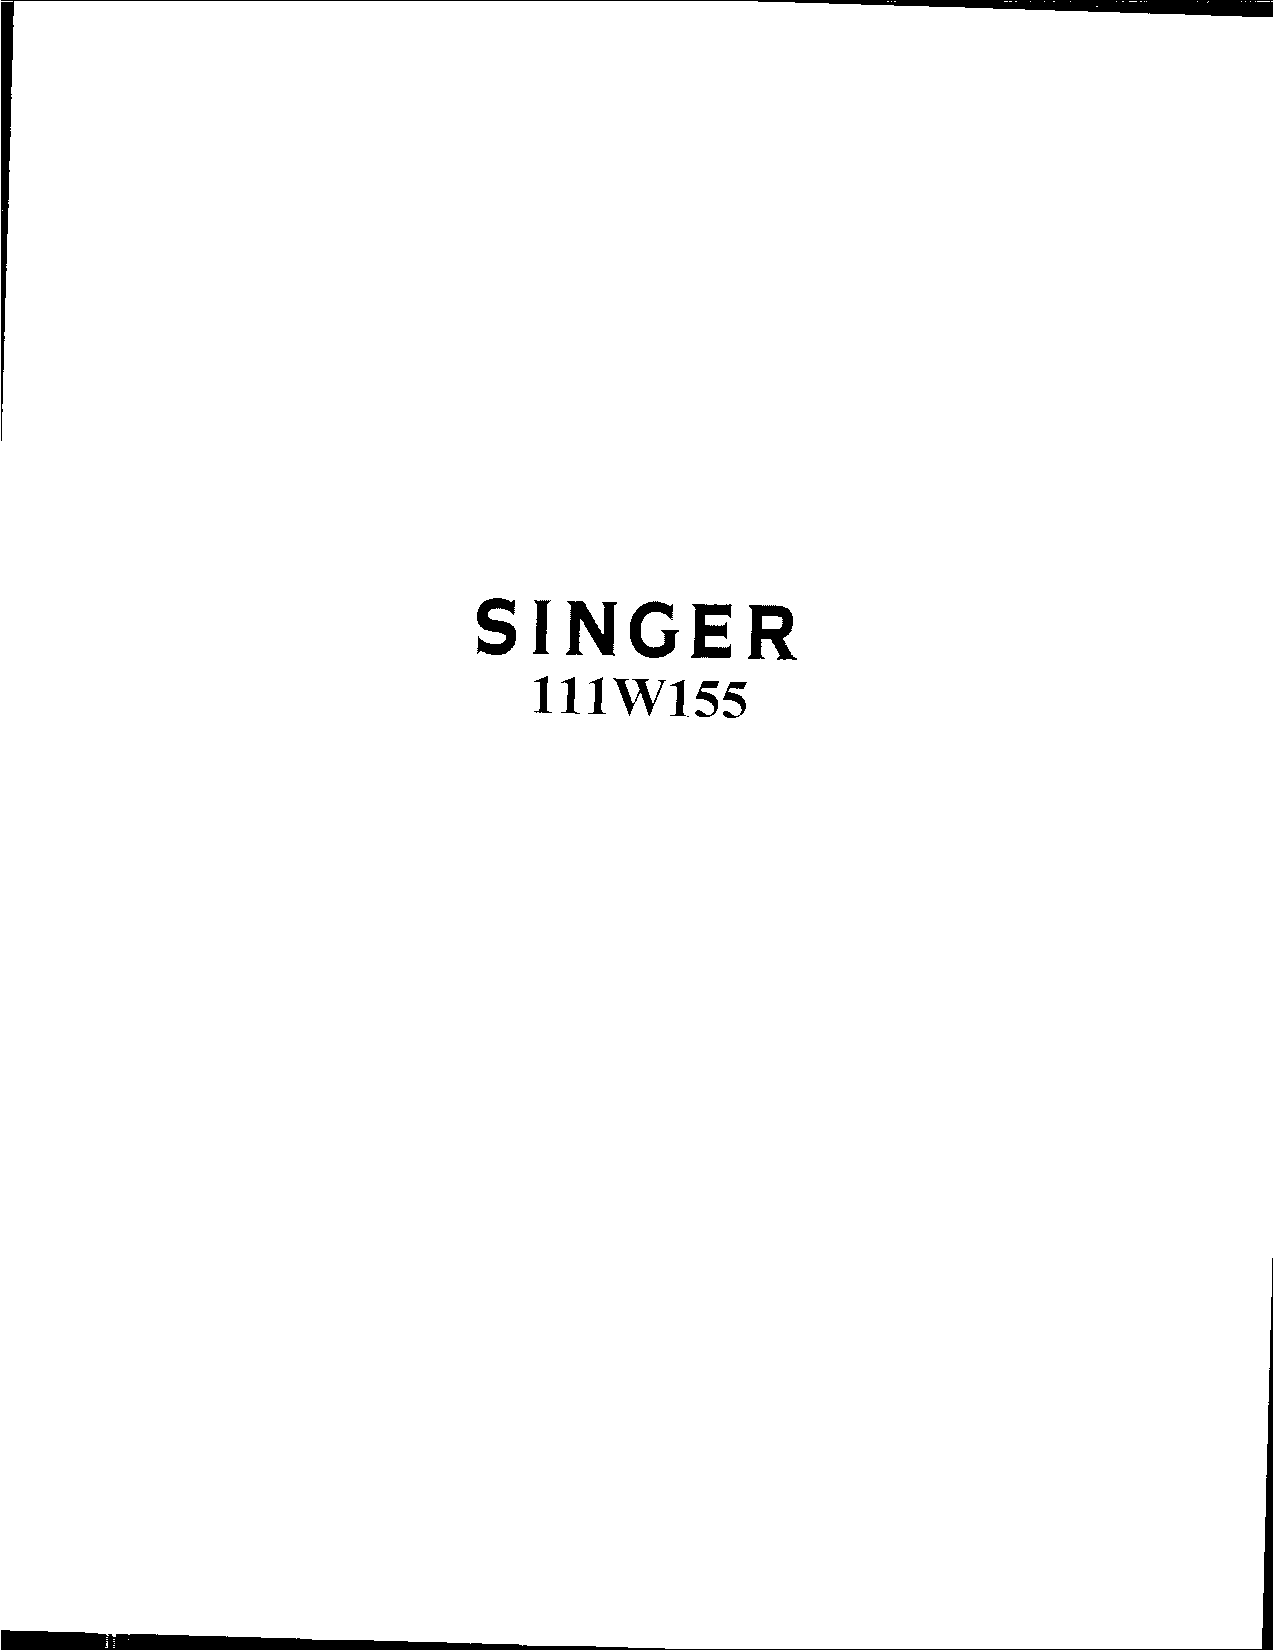 Singer 111W155 User Manual